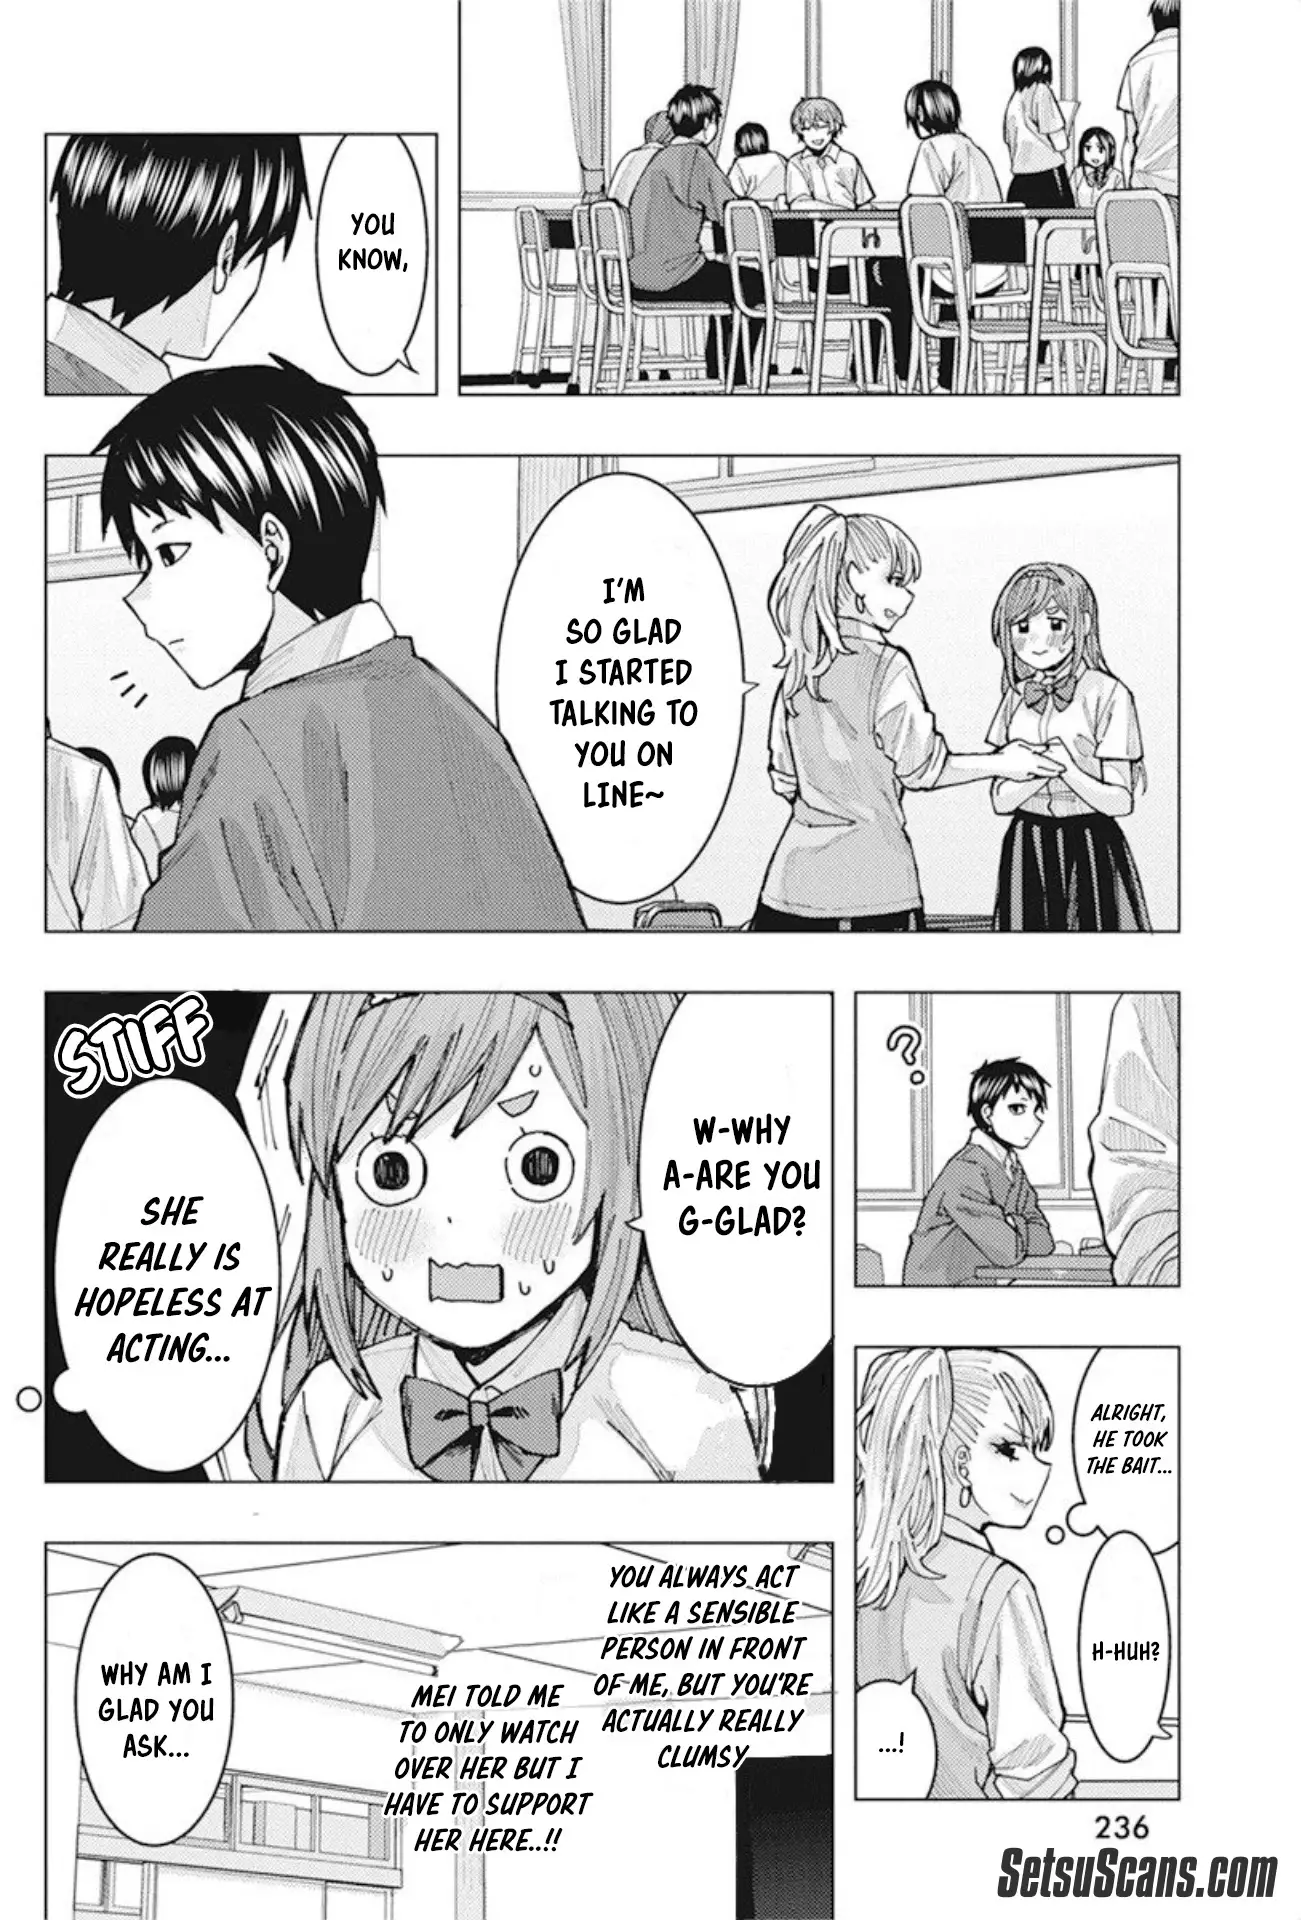 "nobukuni-San" Does She Like Me? - 5 page 12